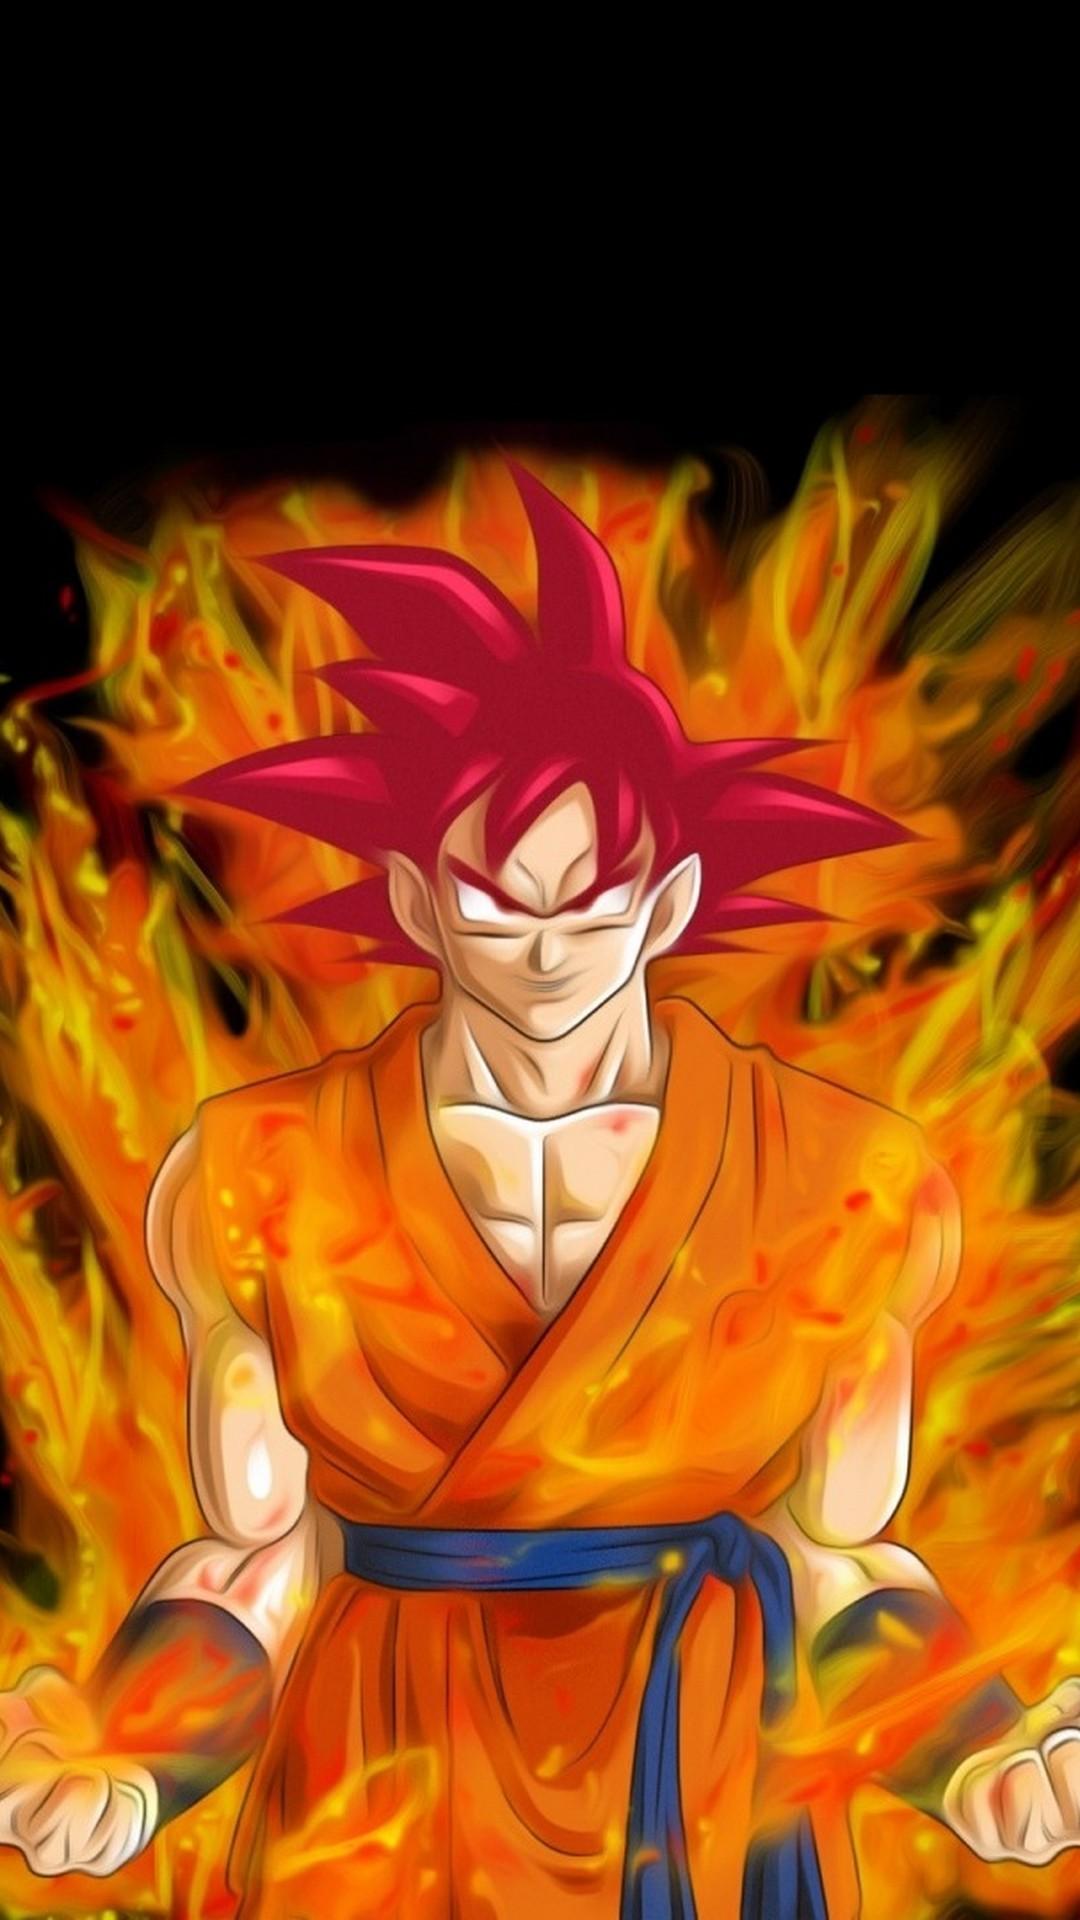 Goku Super Saiyan God Wallpaper iPhone With Image Resolution